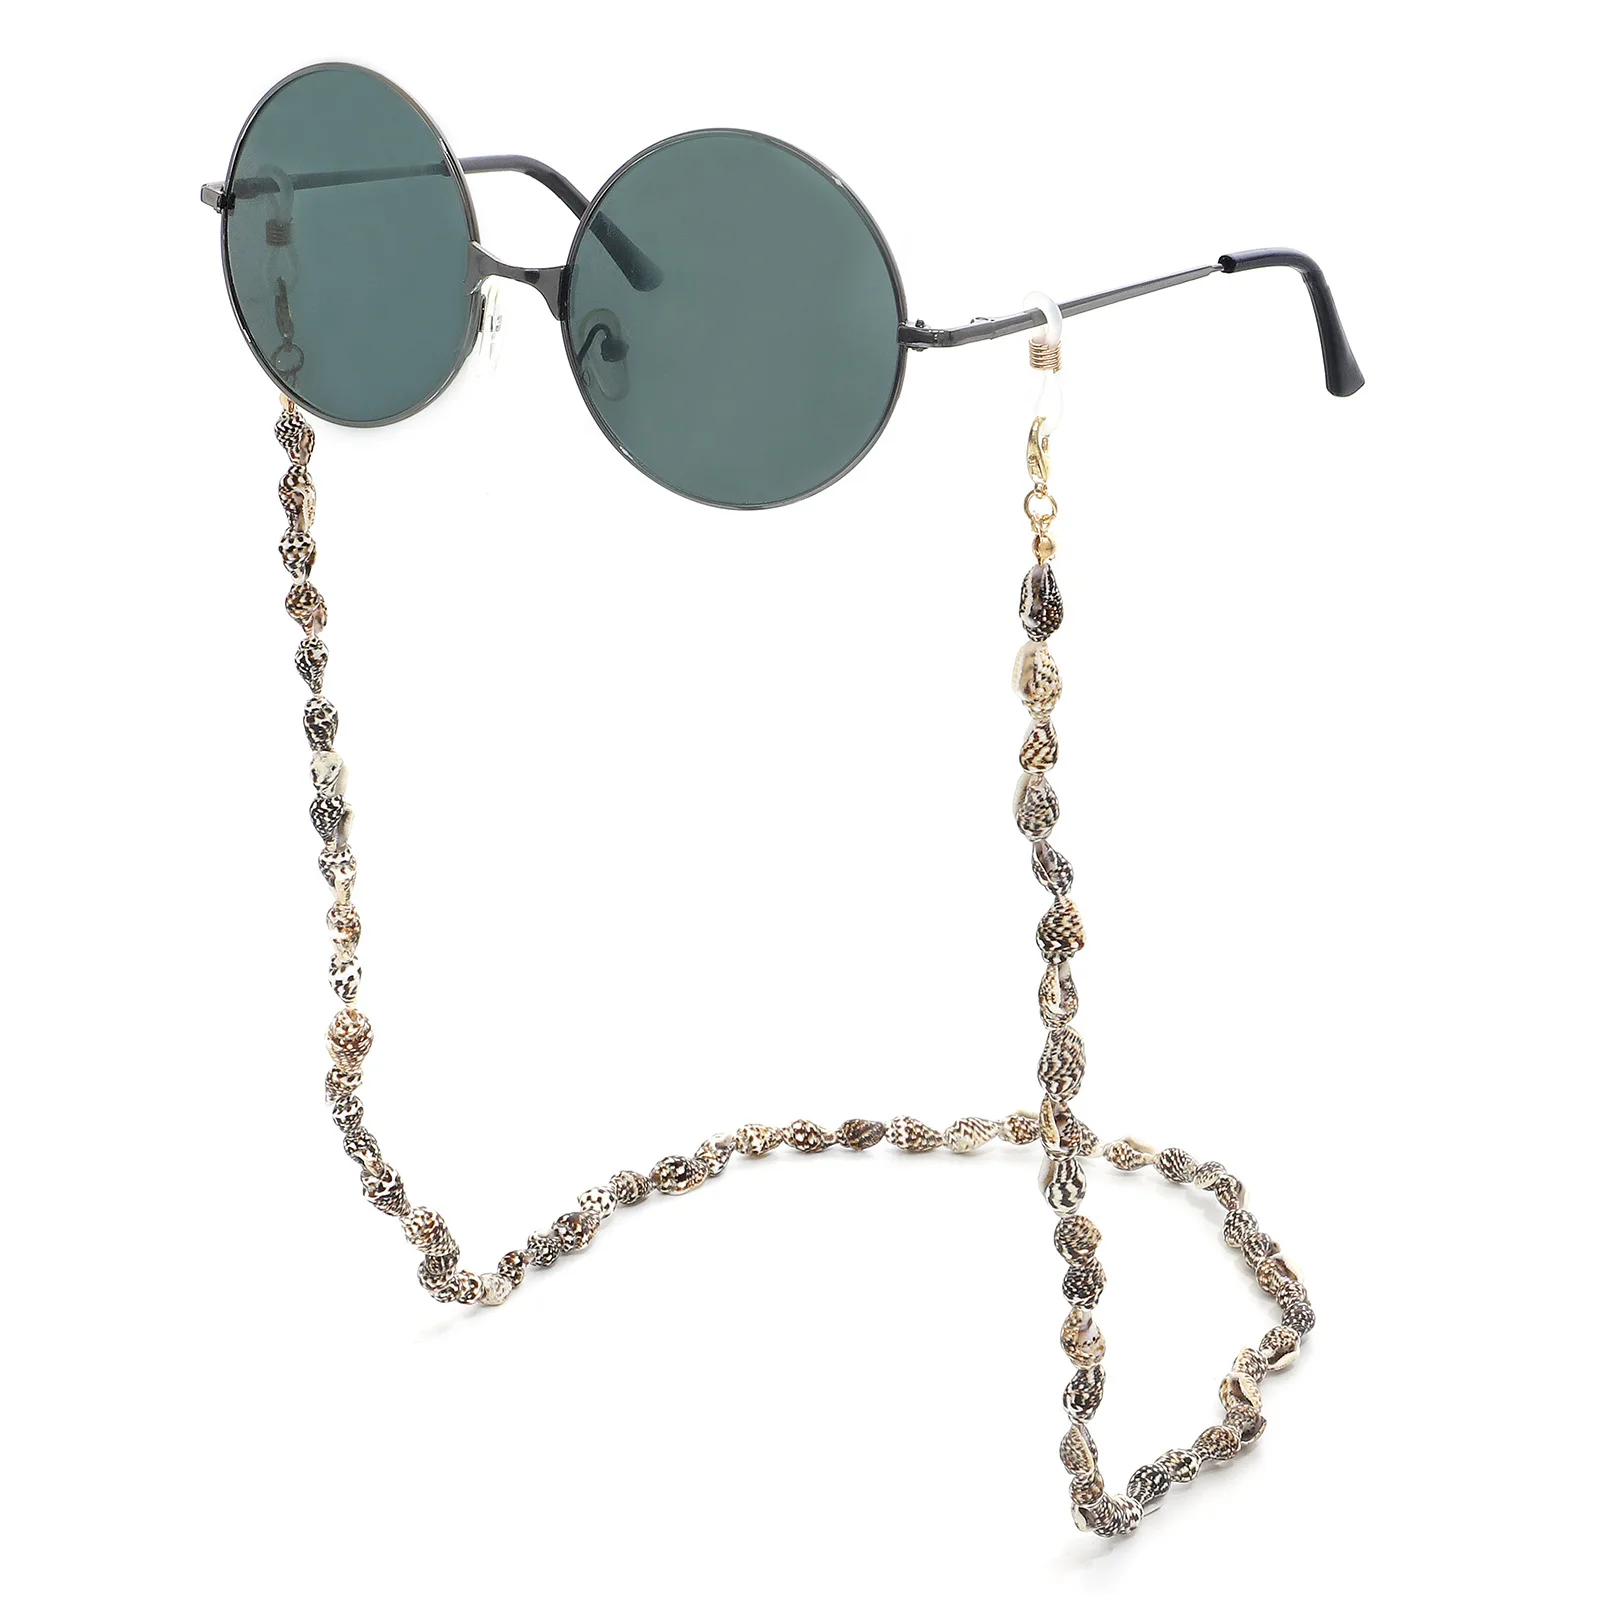 Bead Eyeglass Chain Glasses Strap Holder Lanyard Sunglasses Non-slip Cord Rope